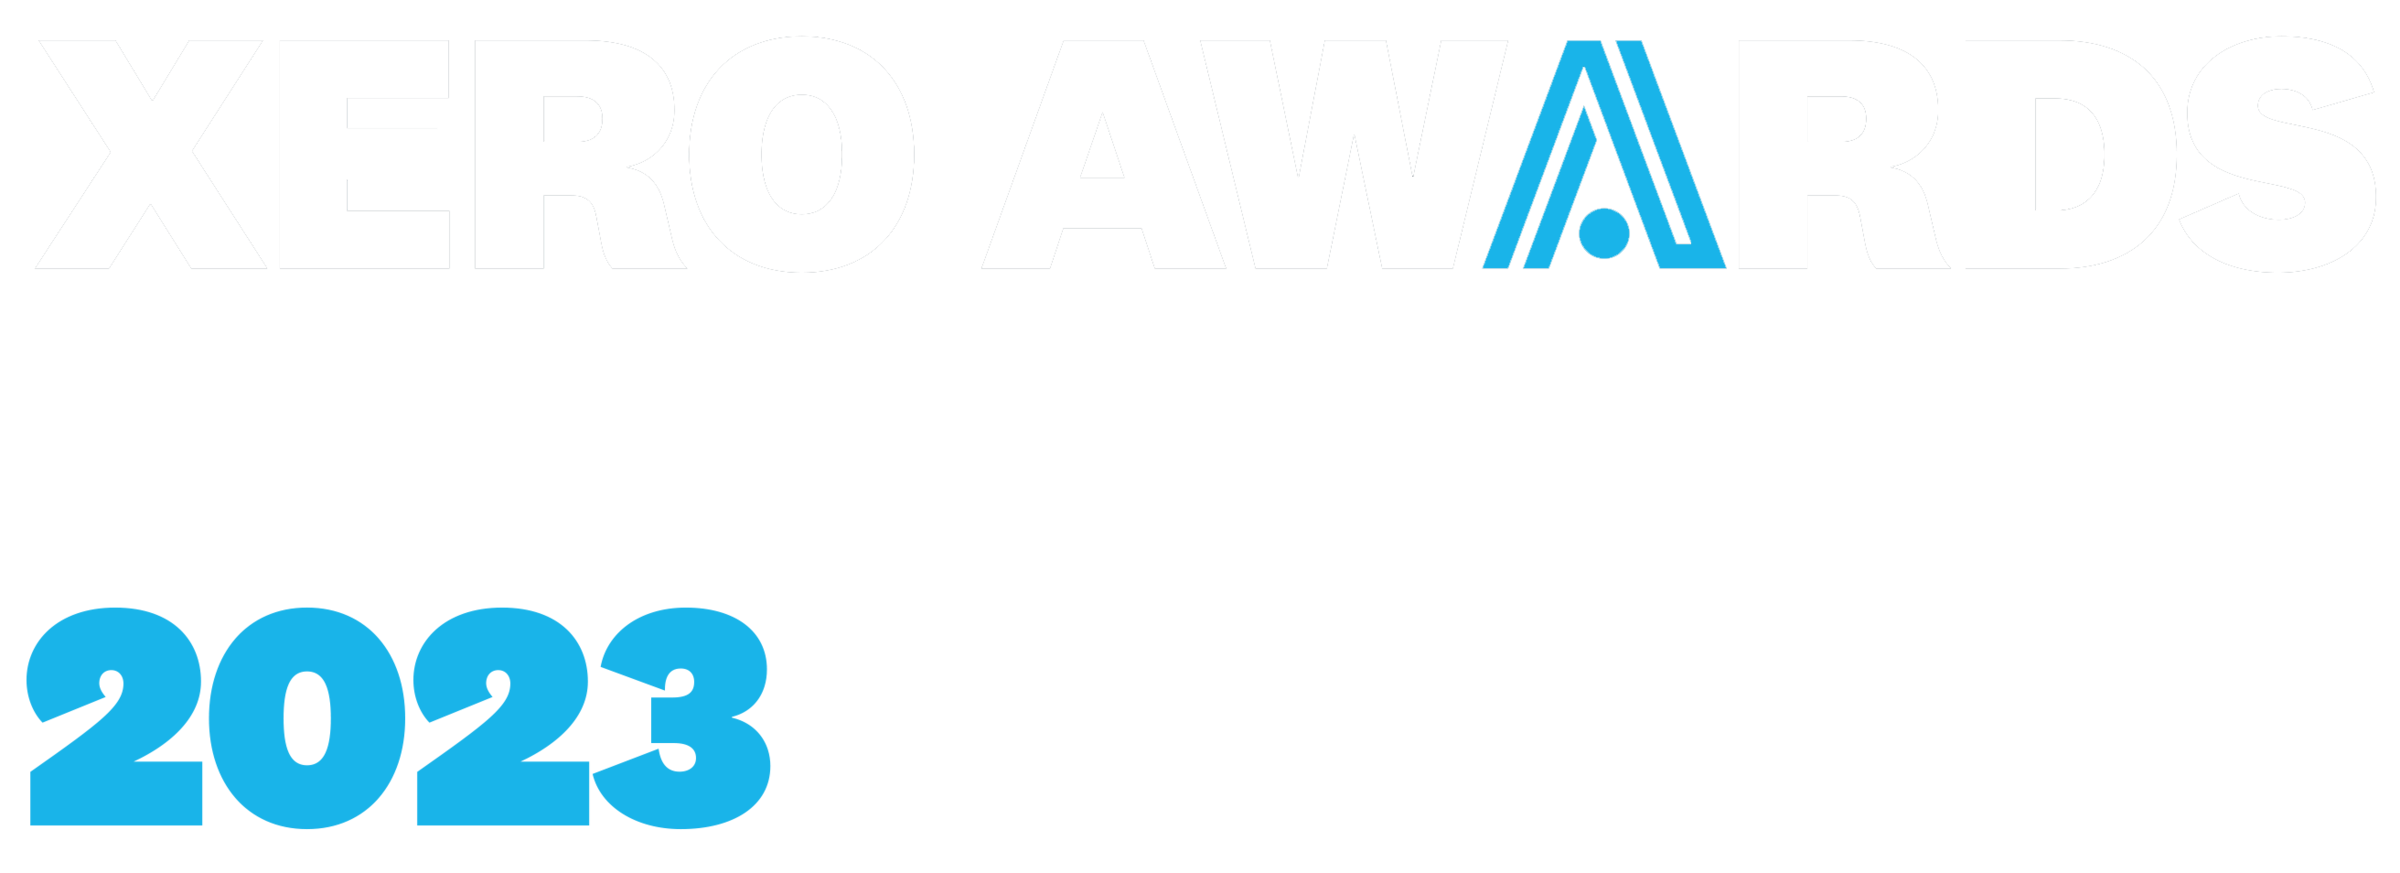 Xero Awards Canada 2023